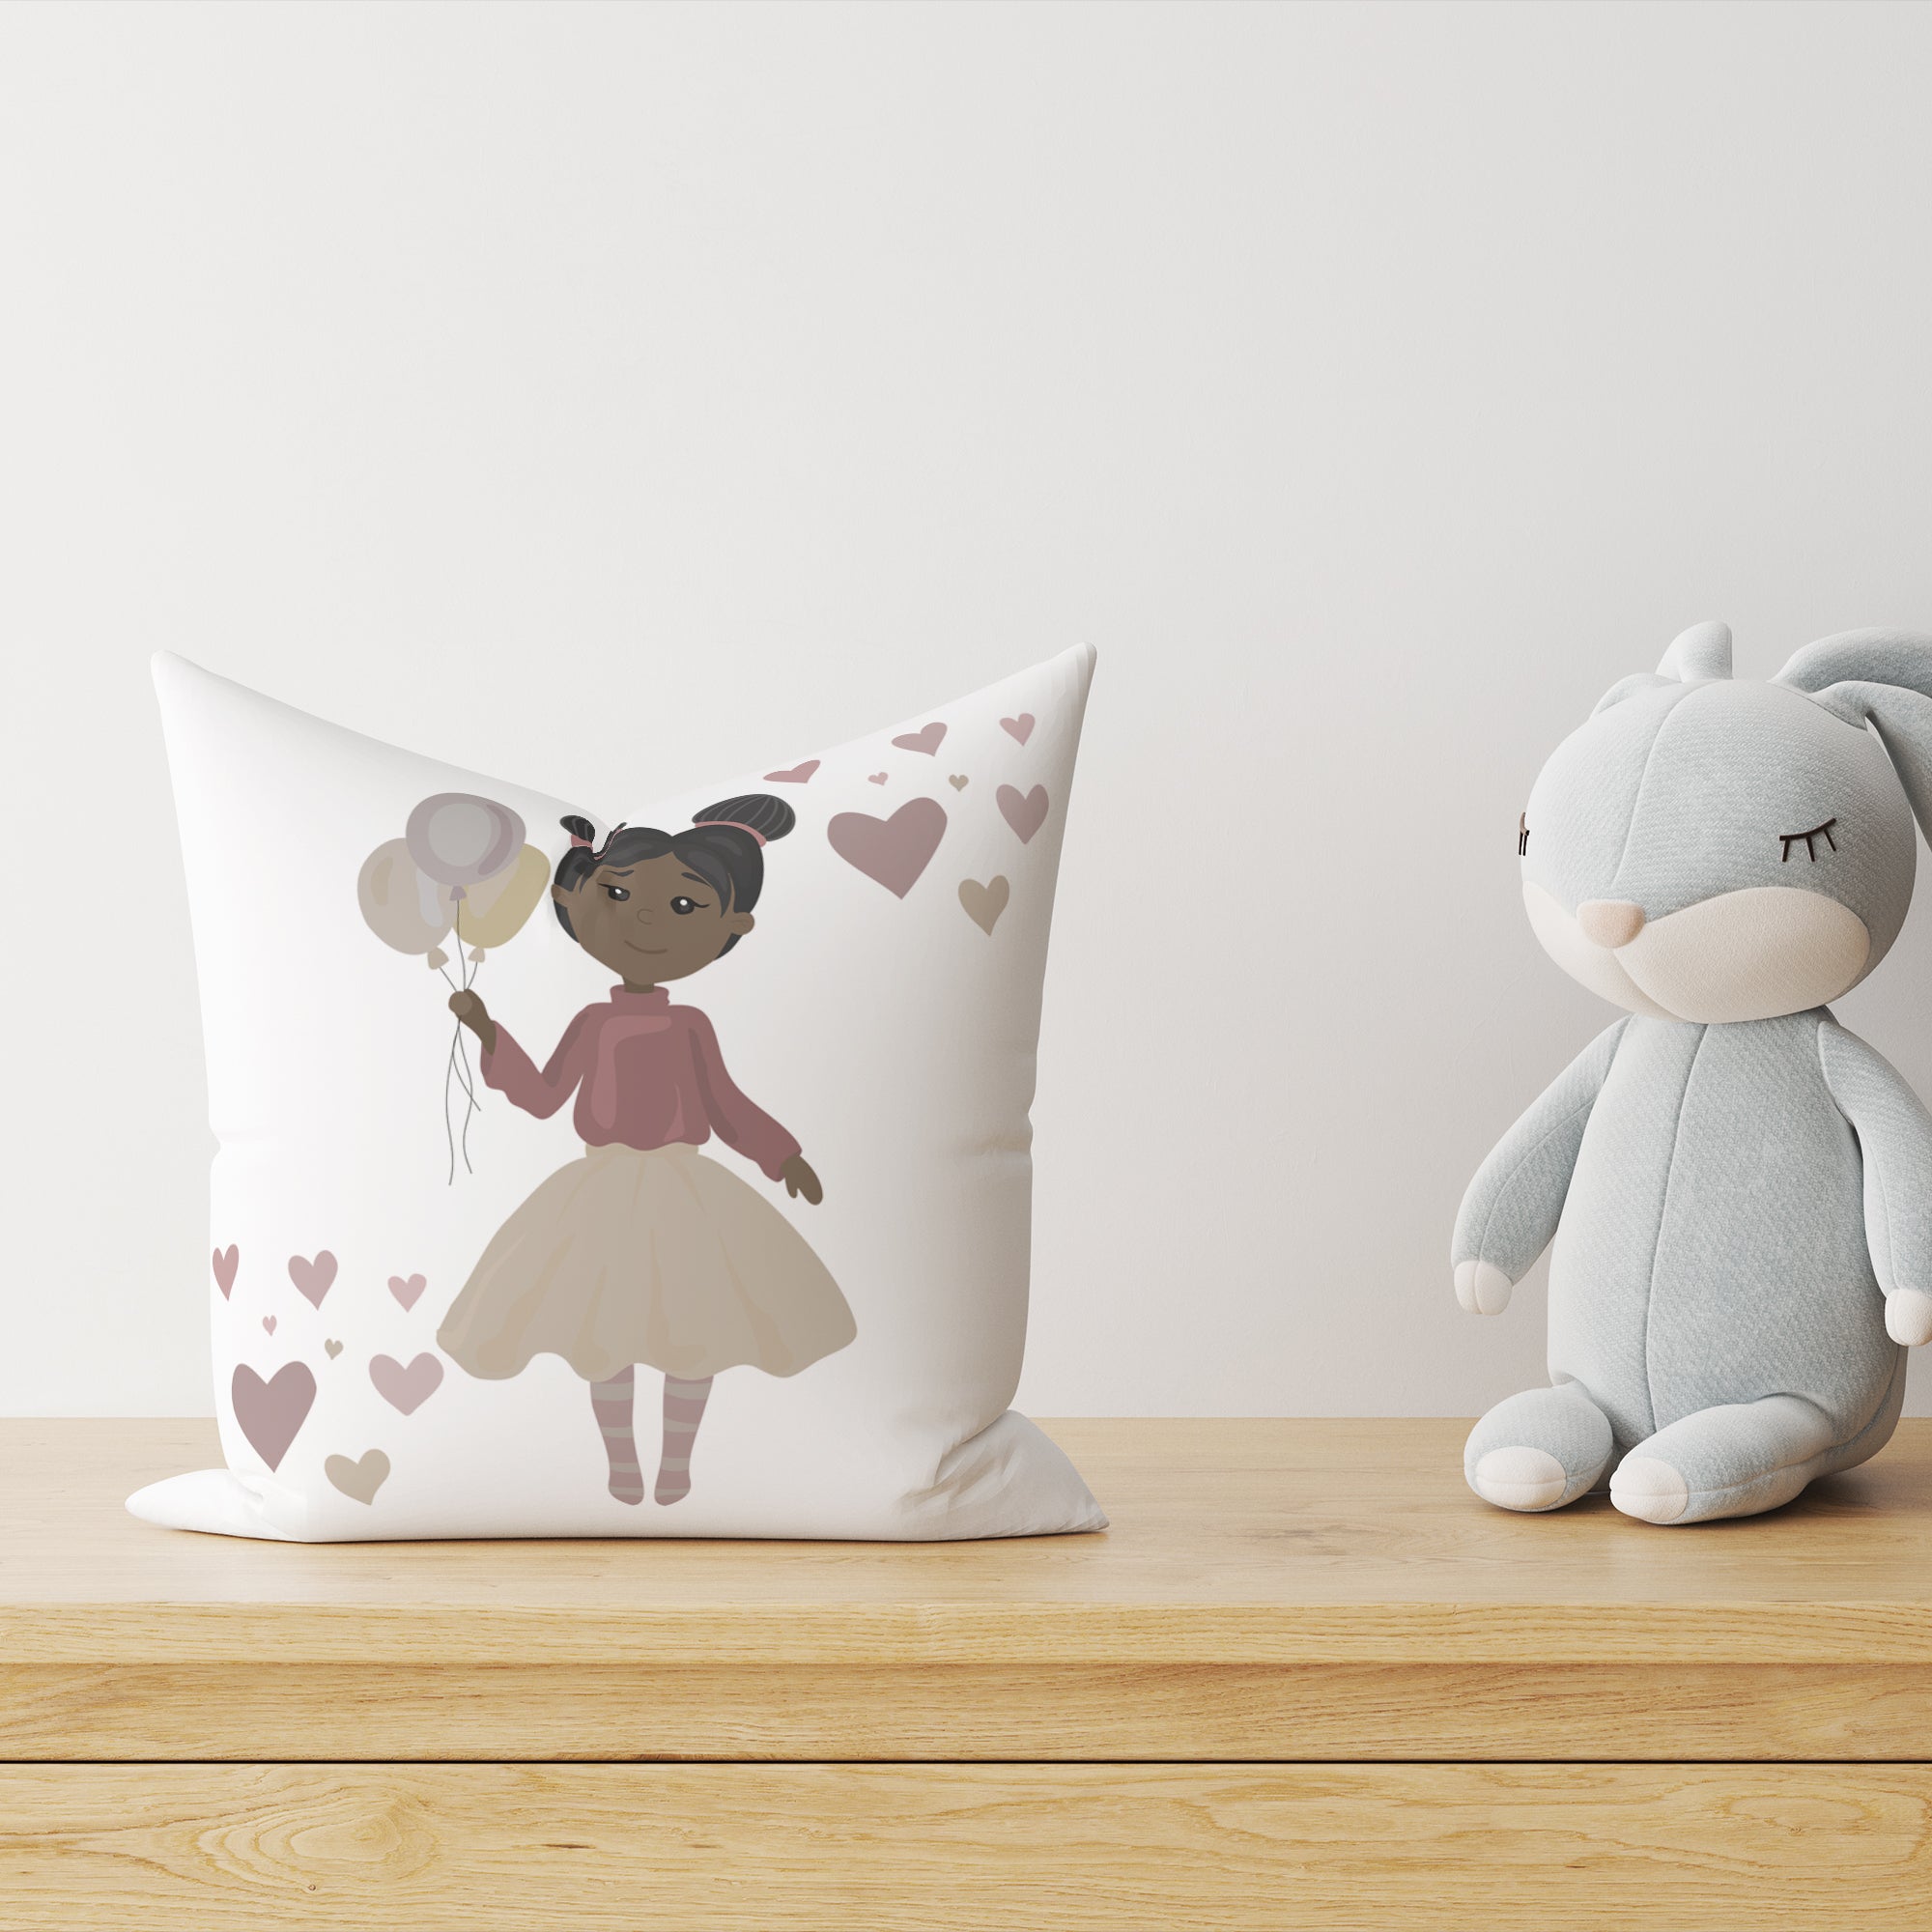 "Little Princess" children's decorative cushion